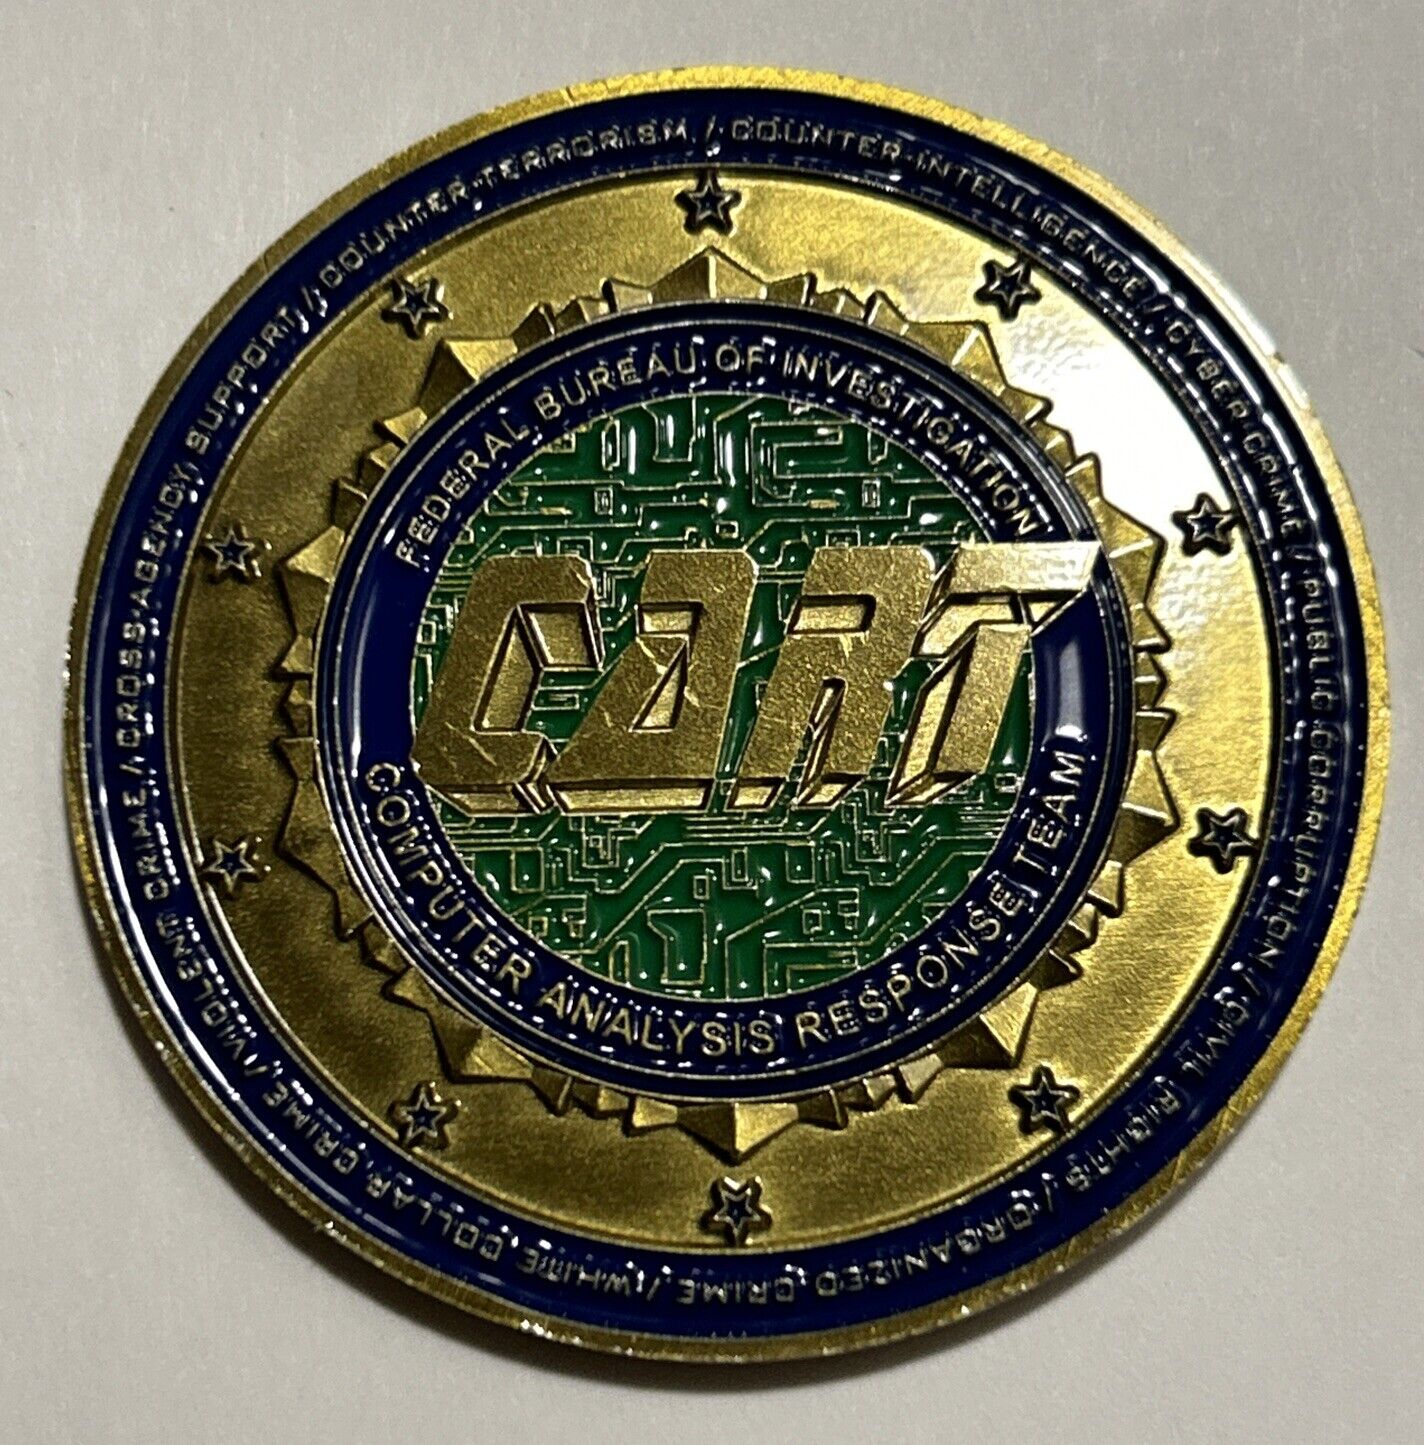 FBI CART Computer Analysis Response Team Challenge Coin